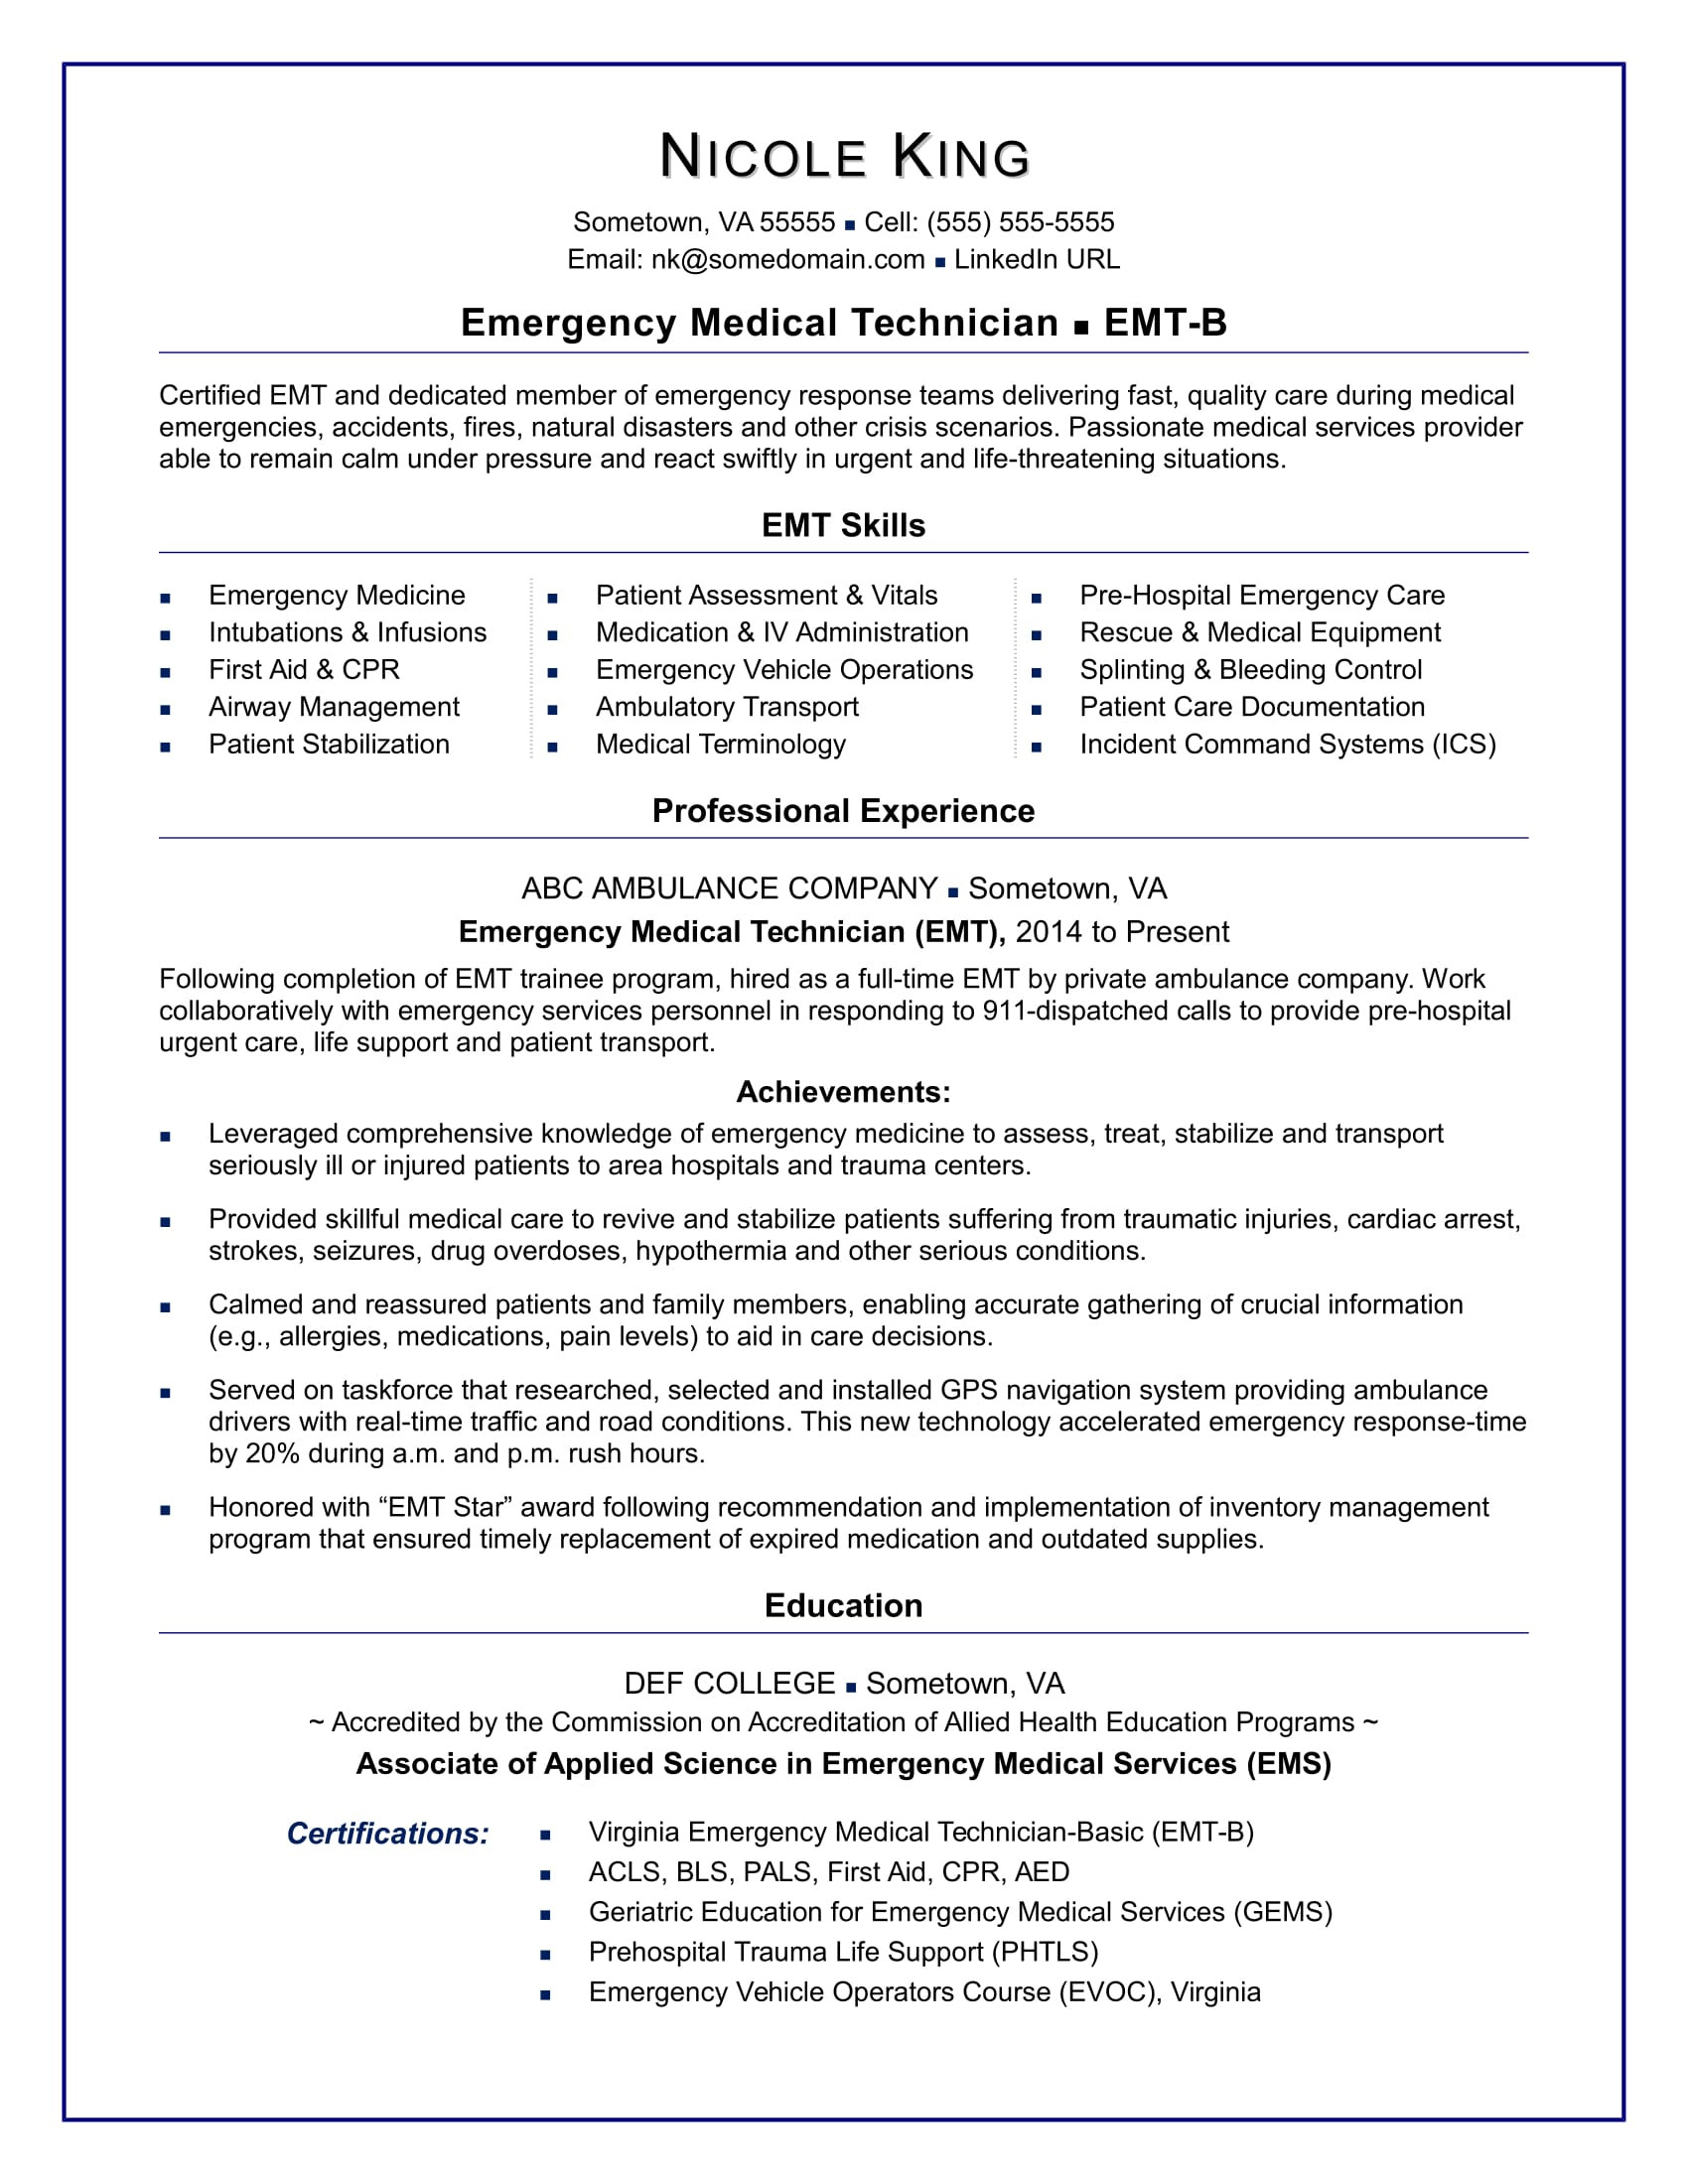 Sample Resumes for Medical Equipment Tech Emt Resume Sample Monster.com